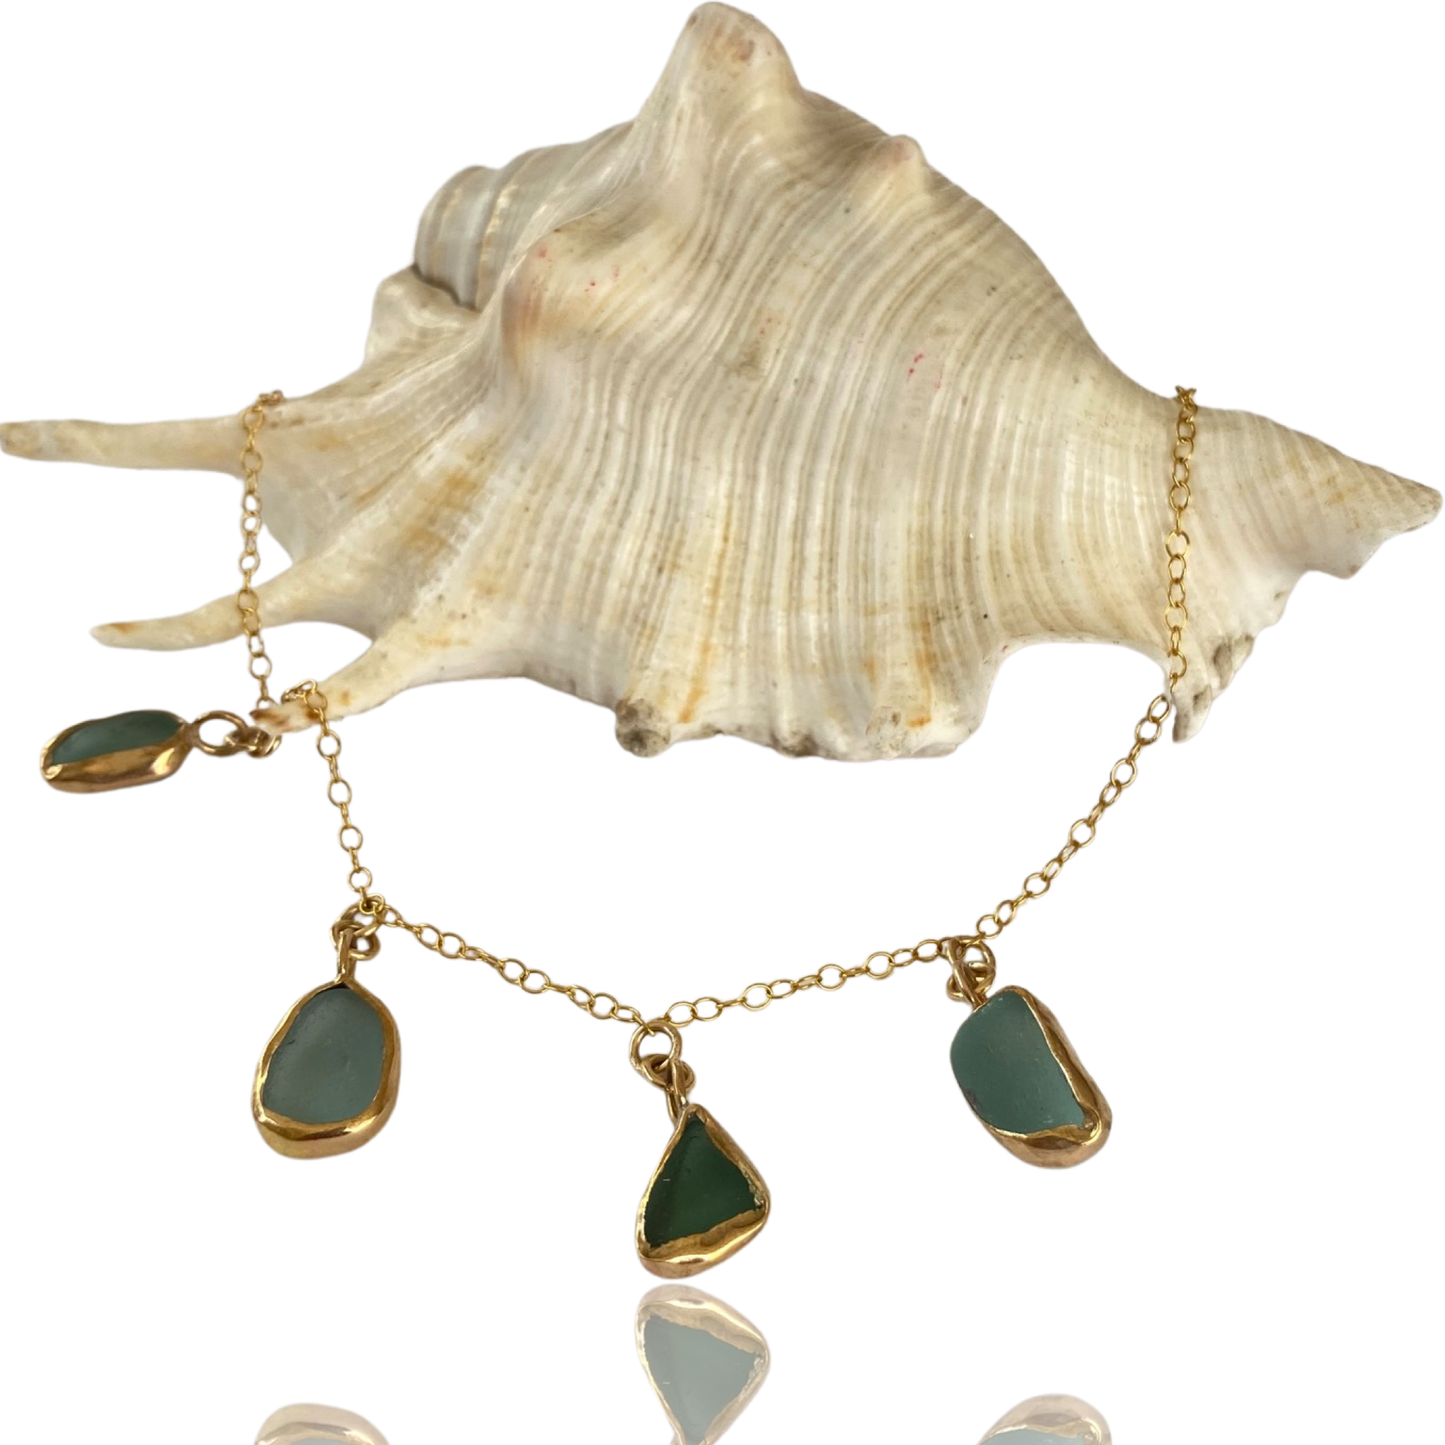 Mermaid Necklace Gold - Love Beach Beads